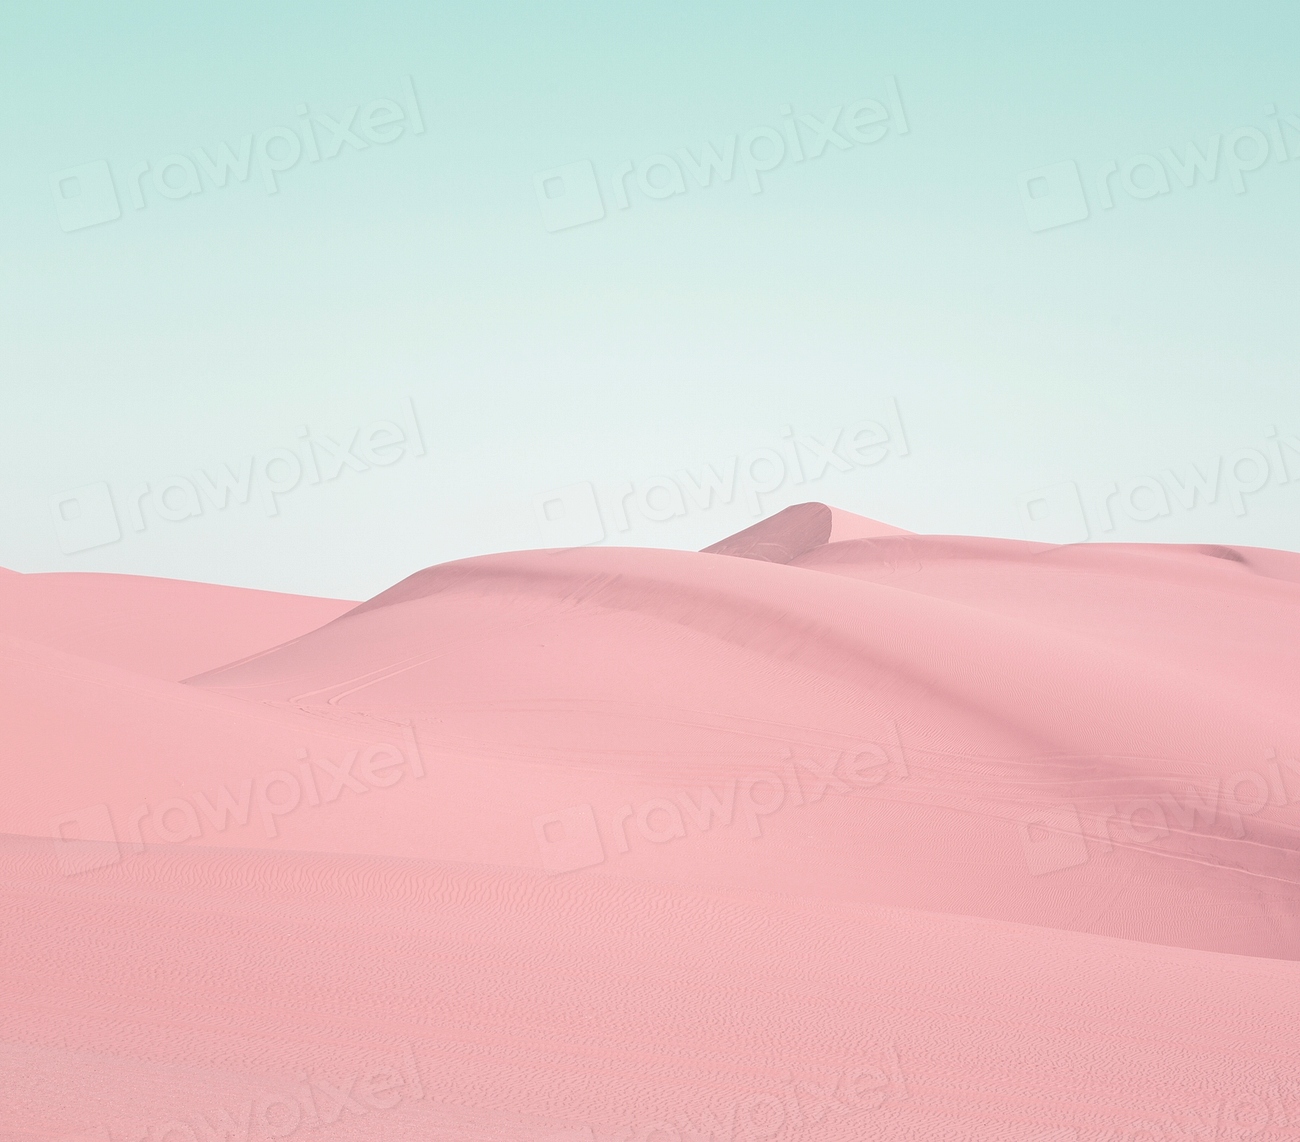 Sand dunes Southern California. Original | Free Photo - rawpixel